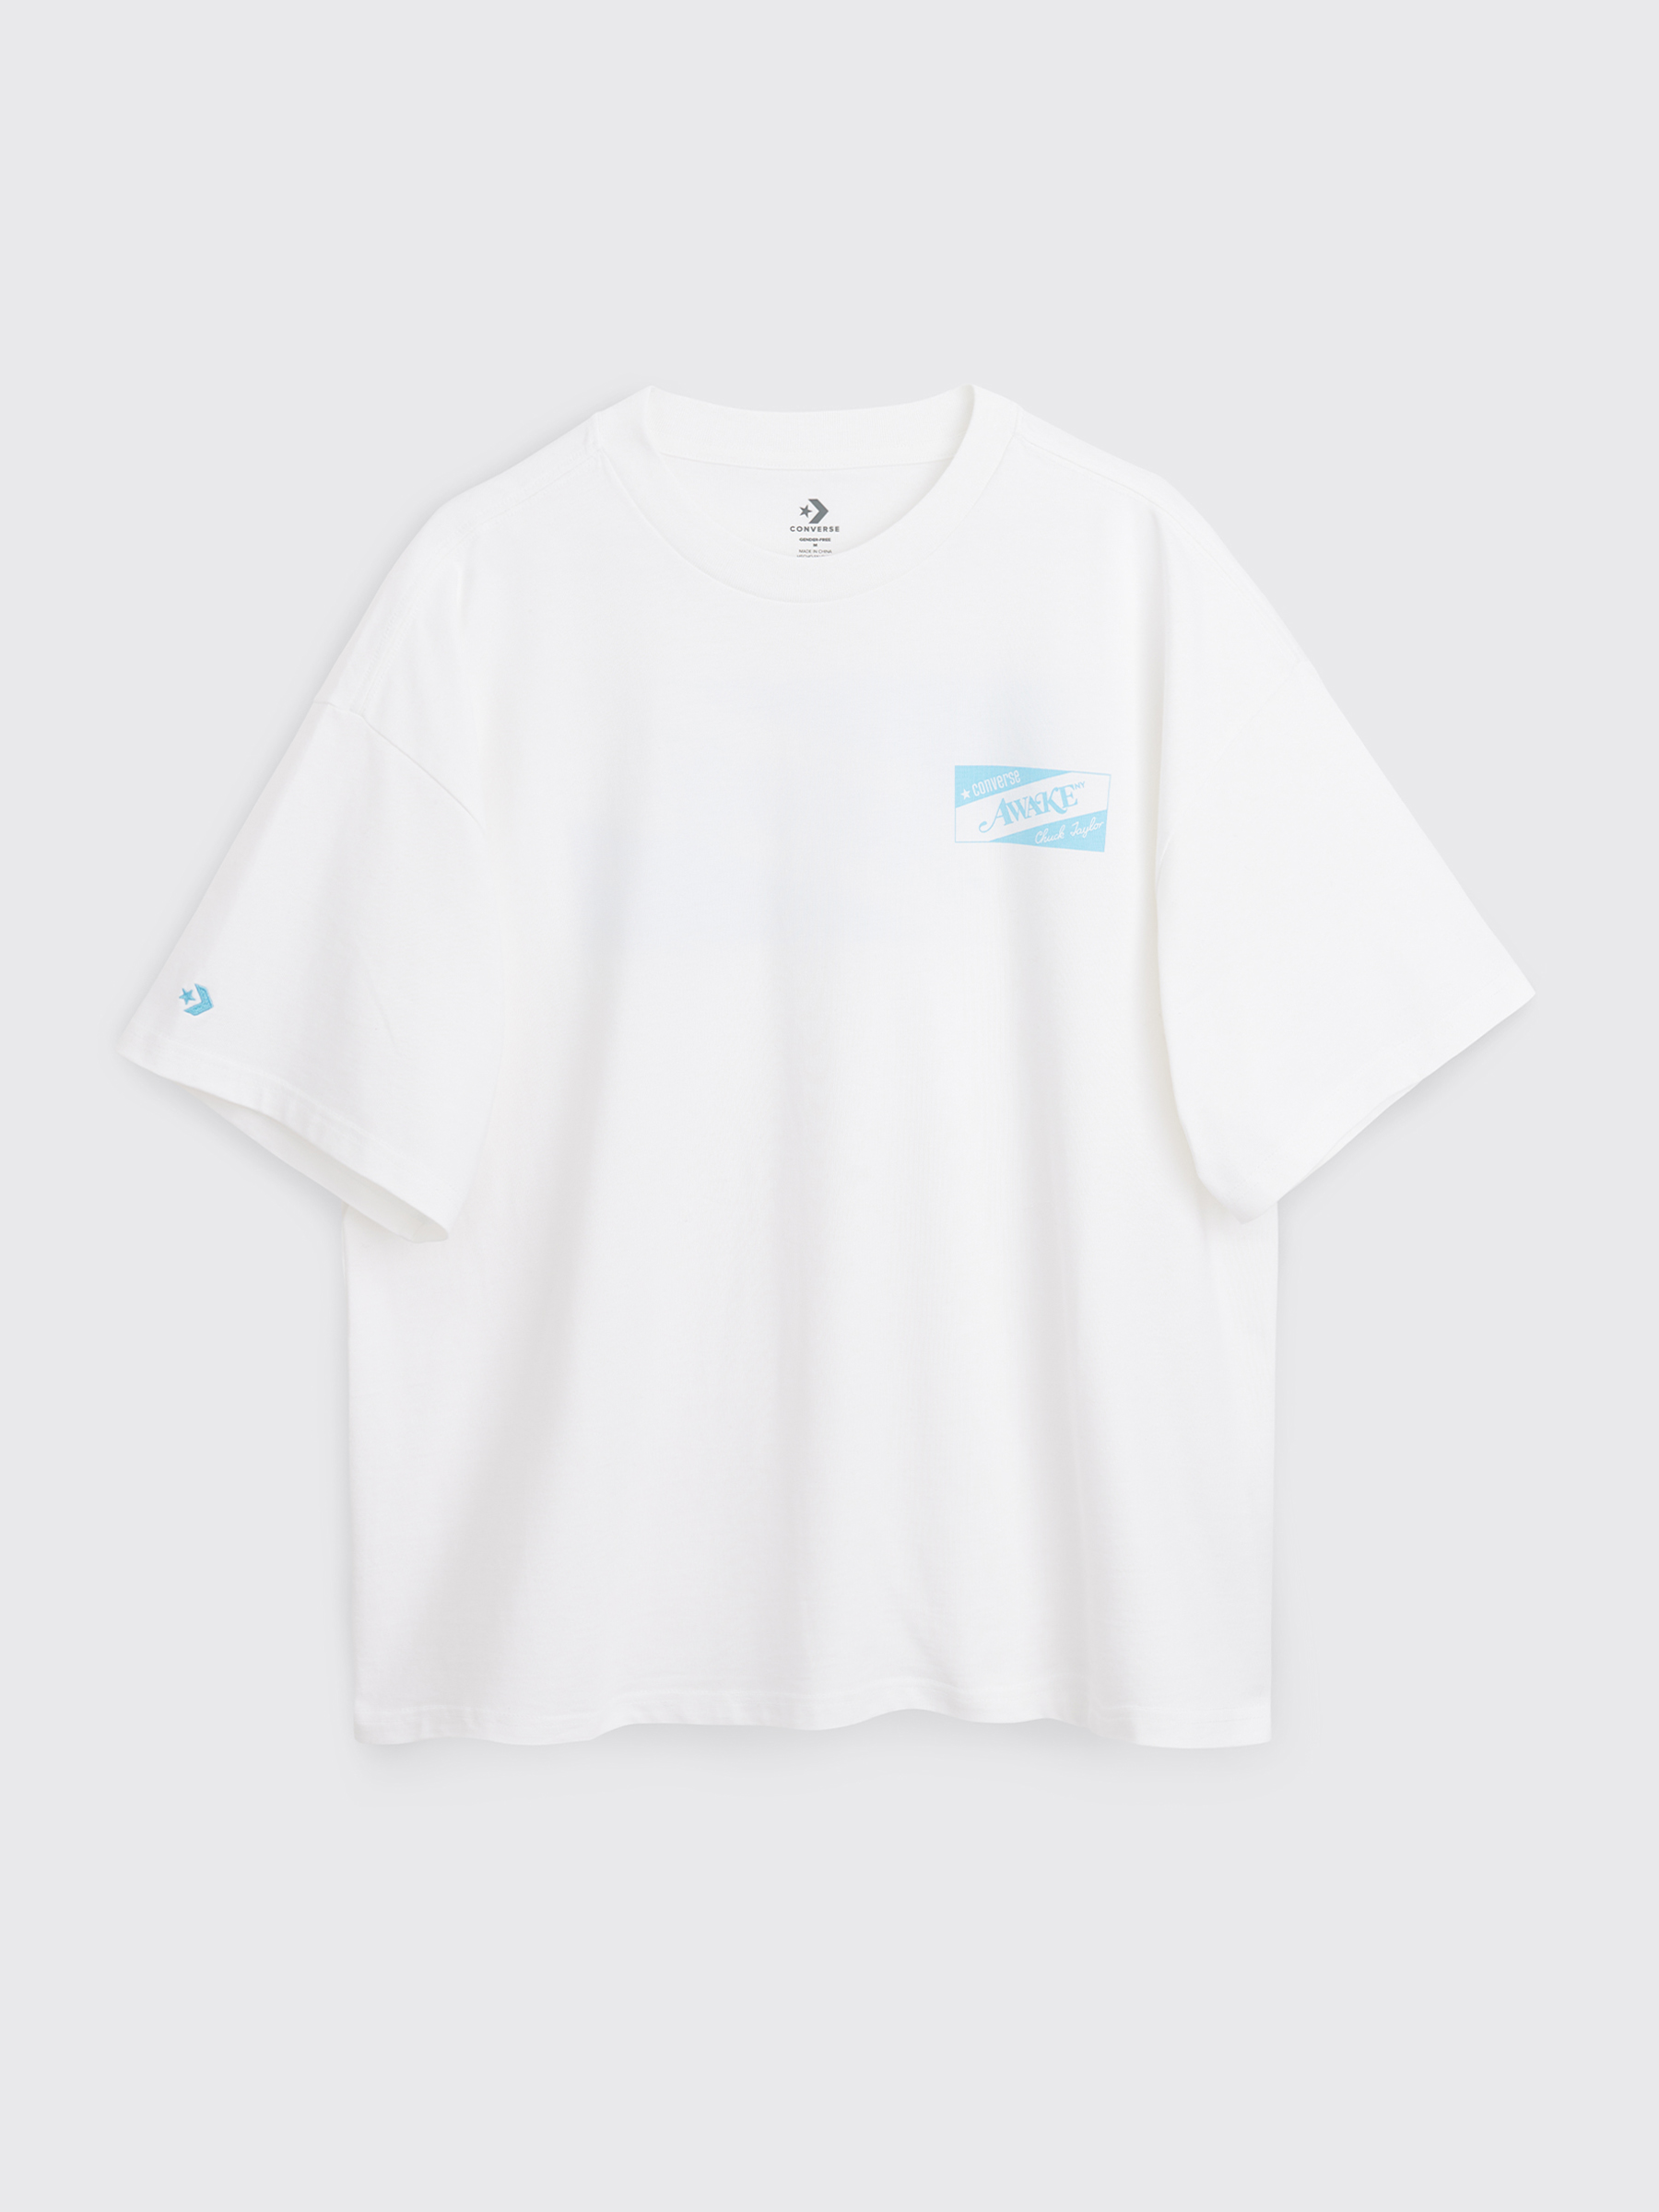 Très Bien - Converse x Awake NY Logo T-shirt White